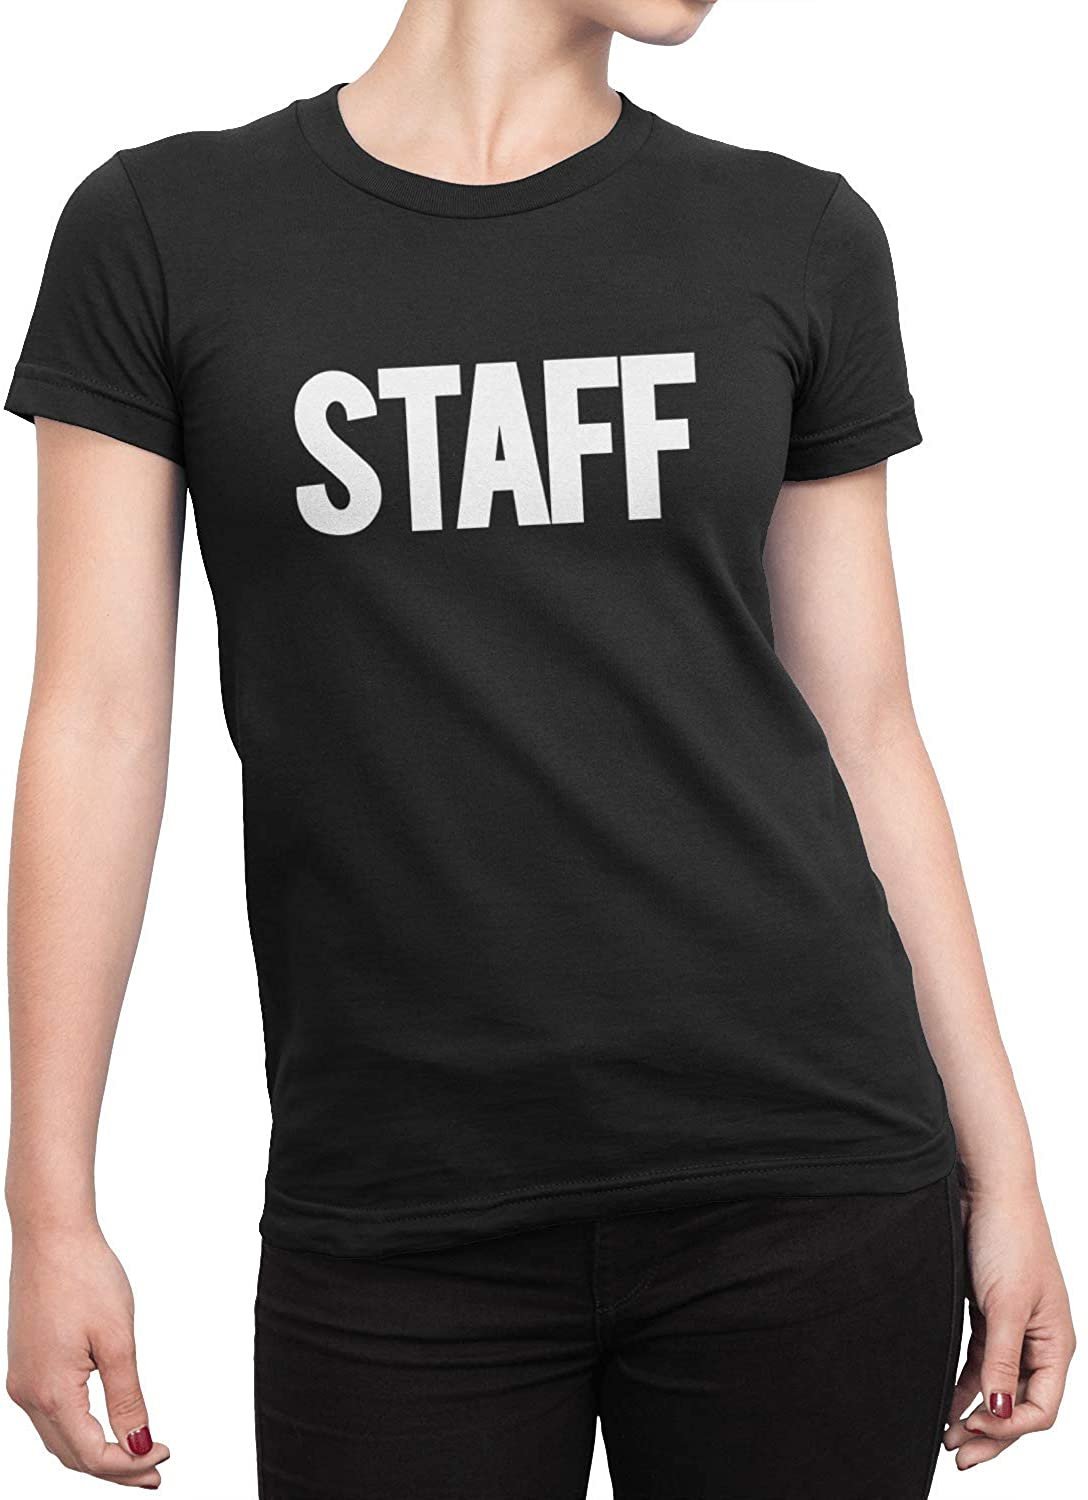 Staff Ladies Short Sleeve T-Shirt (Solid Design, Black)